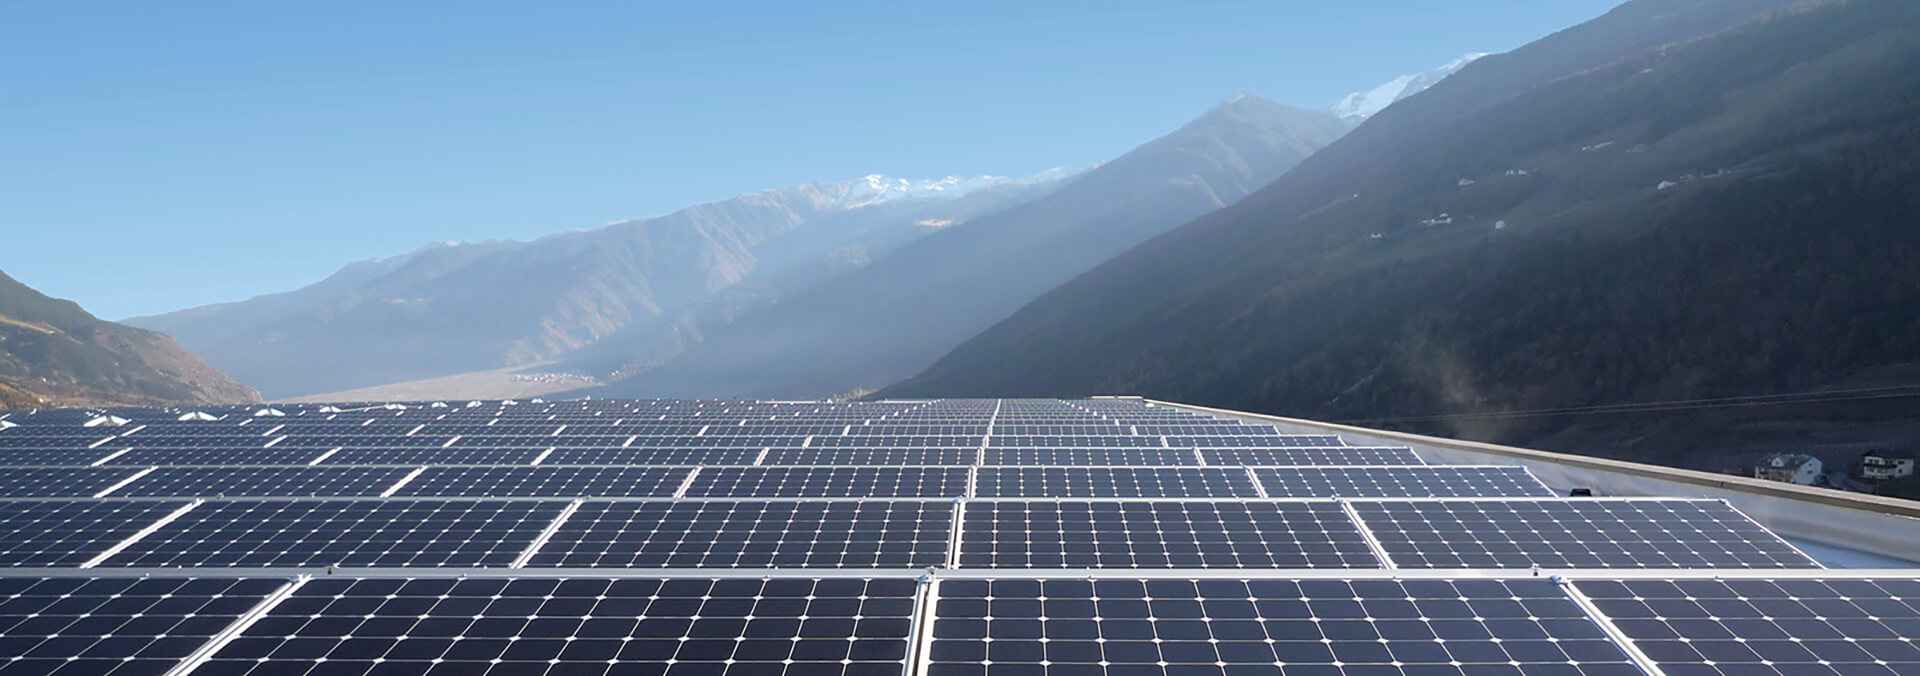 Solar Energy Company Solar Panels SunPower Australia